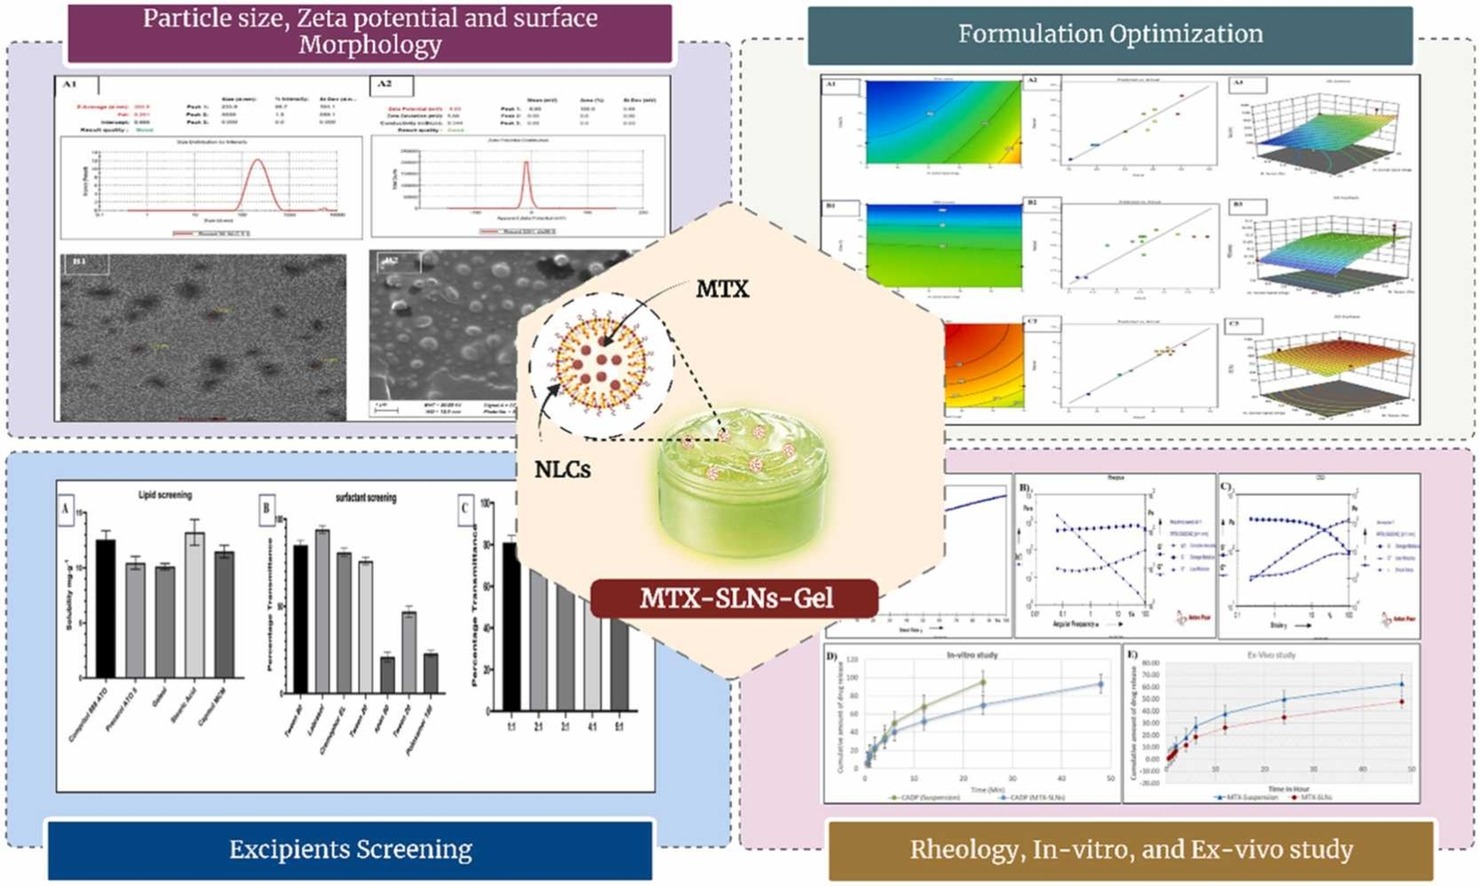 Formulation development of methotrexate lipid-based nanogel for treatment of skin cancer